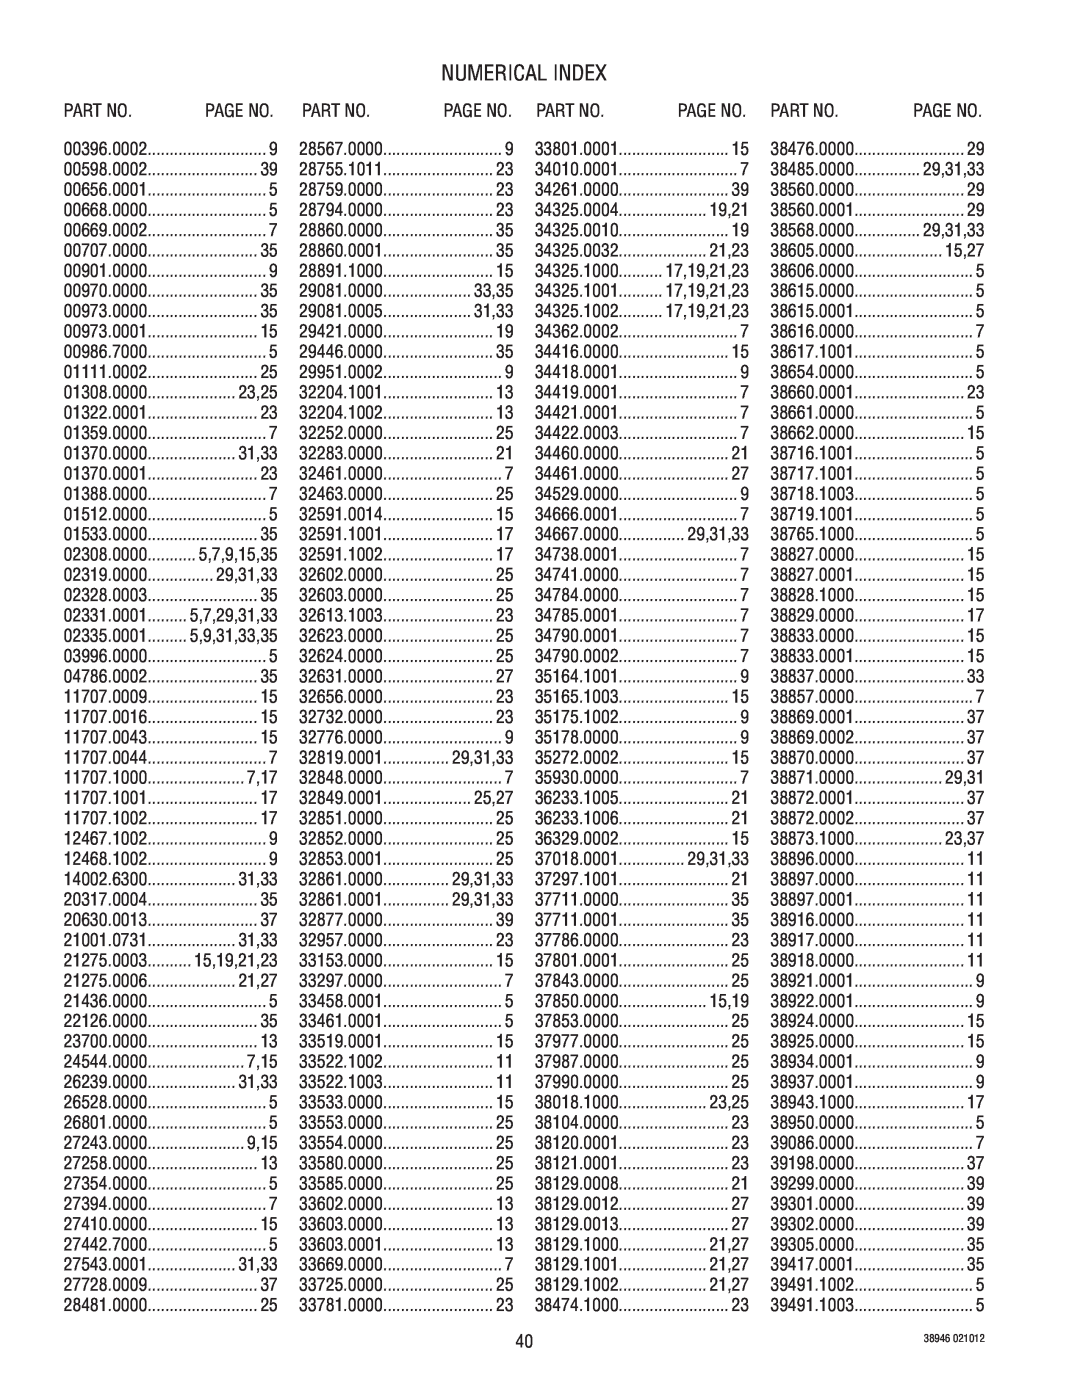 Bunn JDF-2S manual Numerical Index 